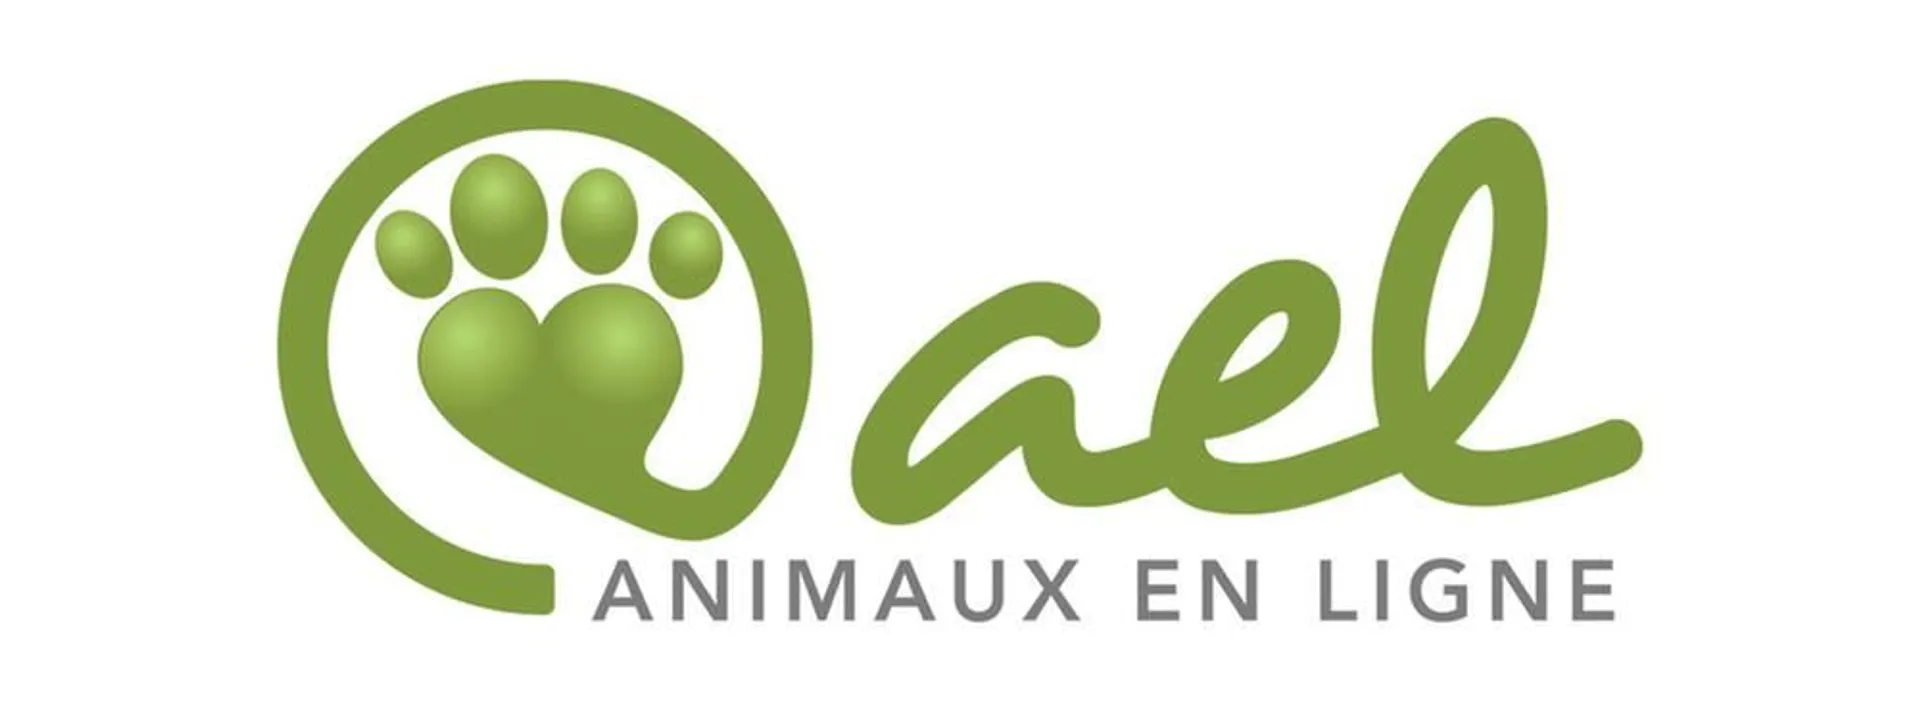 ANIMAUX EN LIGNE logo de circulaire